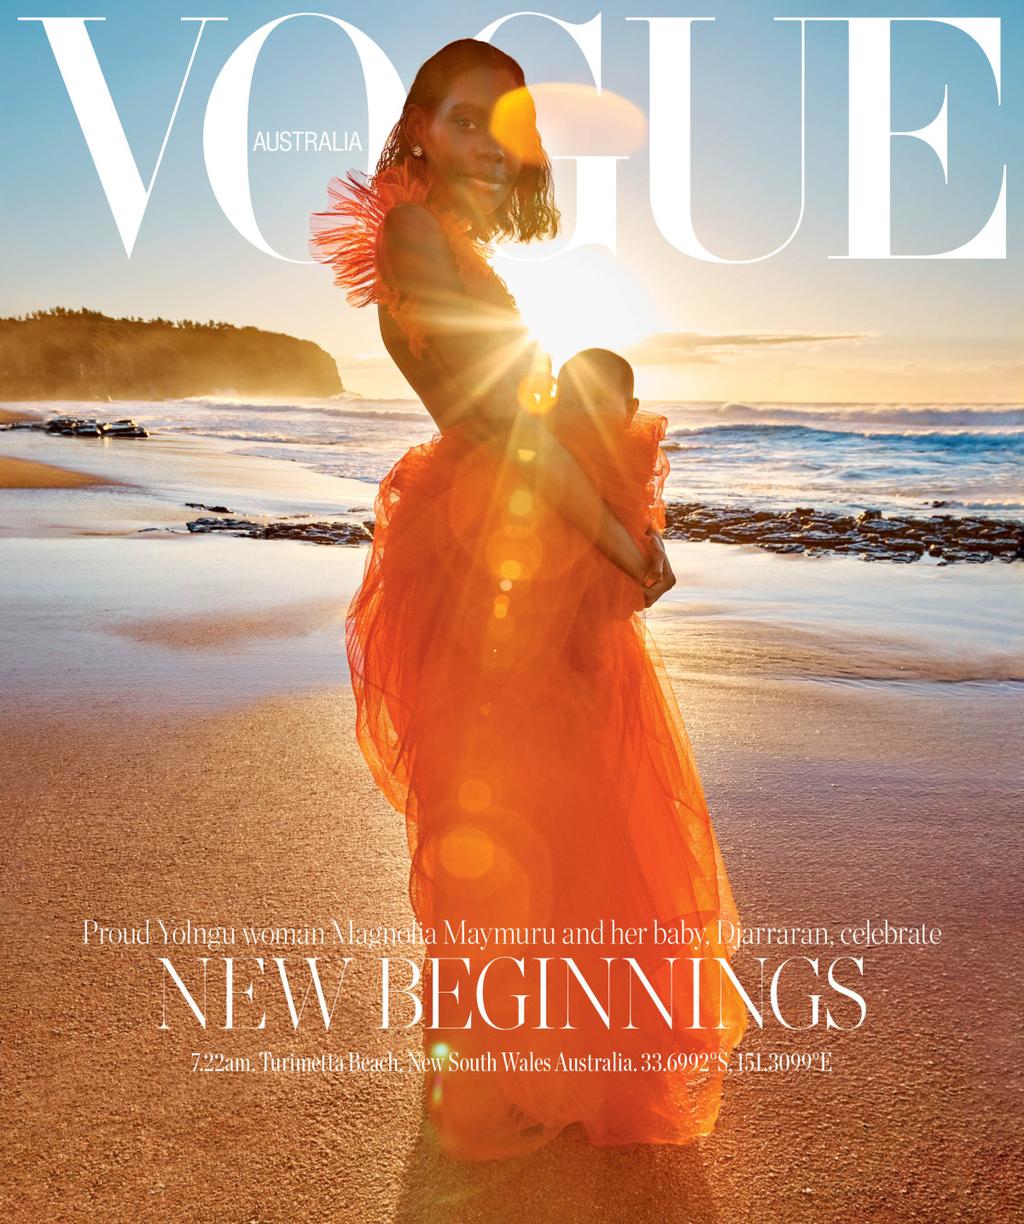 Vogue unites to celebrate new beginnings - Vogue Australia